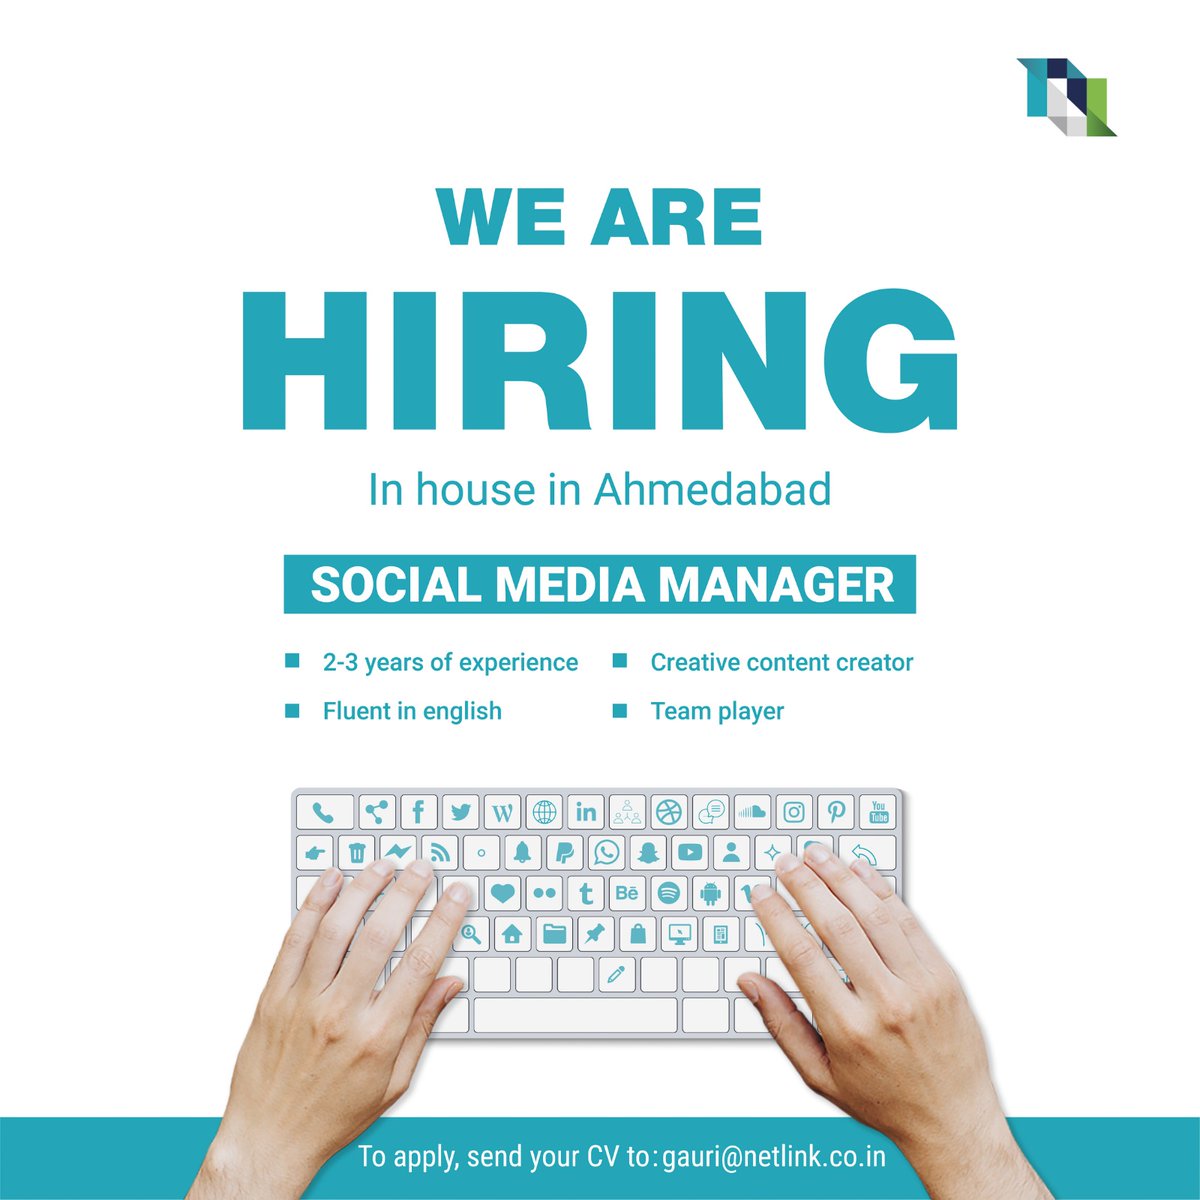 We're hiring a Social Media Manager. Ready to create, engage, and connect? Join us now.

#NetlinkIndia #wearehiring #Socialmediamanager #creativecommunity #socialmediamanagerjob #ahmedabadjobs